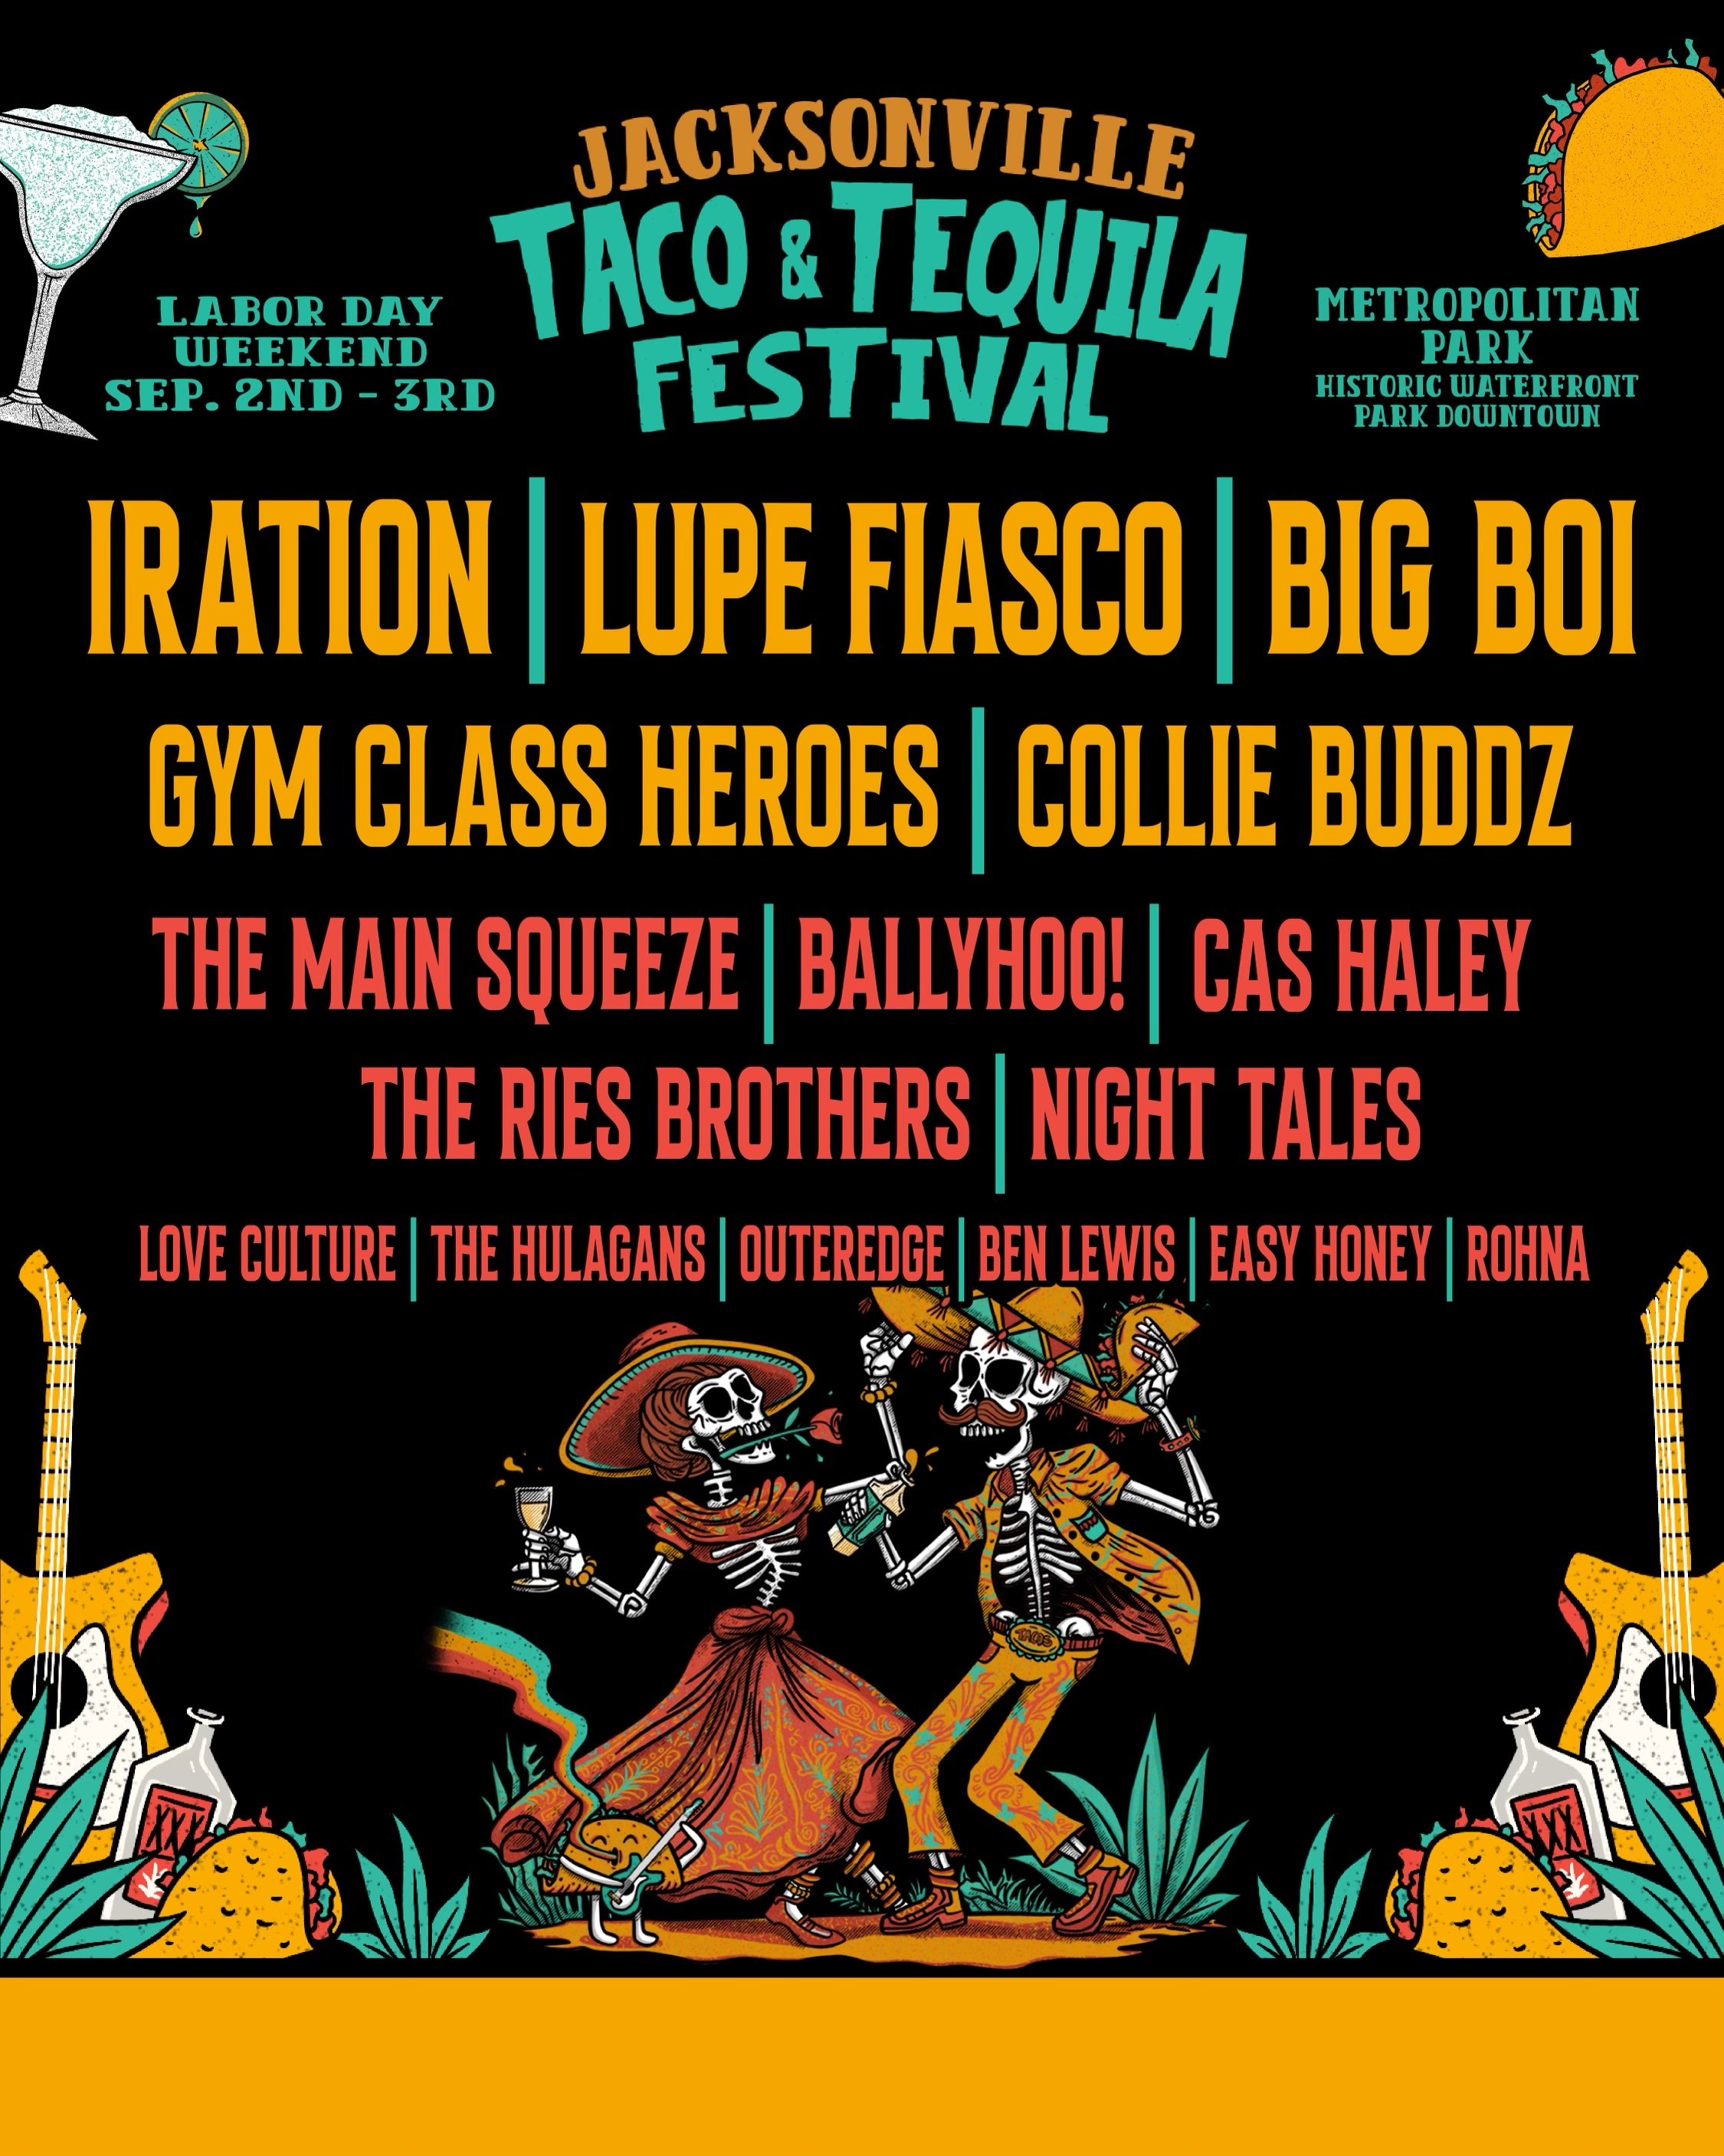 Iration - Jacksonville Taco & Tequila Festival